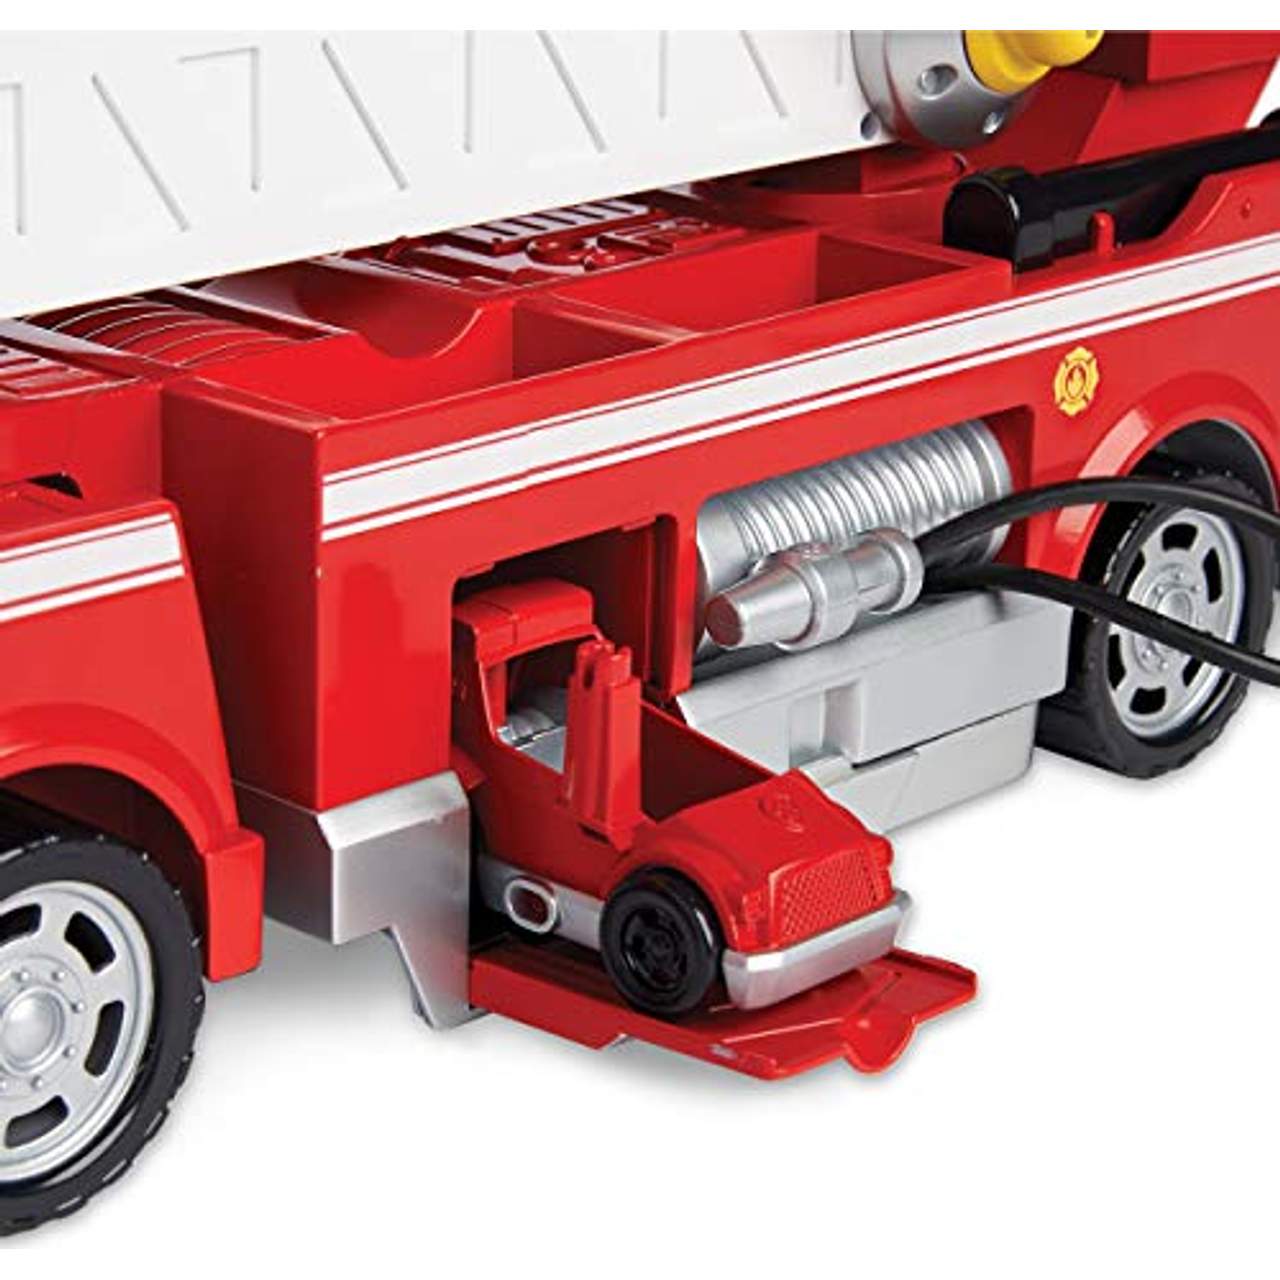 PAW Patrol 6043989 Ultimate Rescue Feuerwehrauto